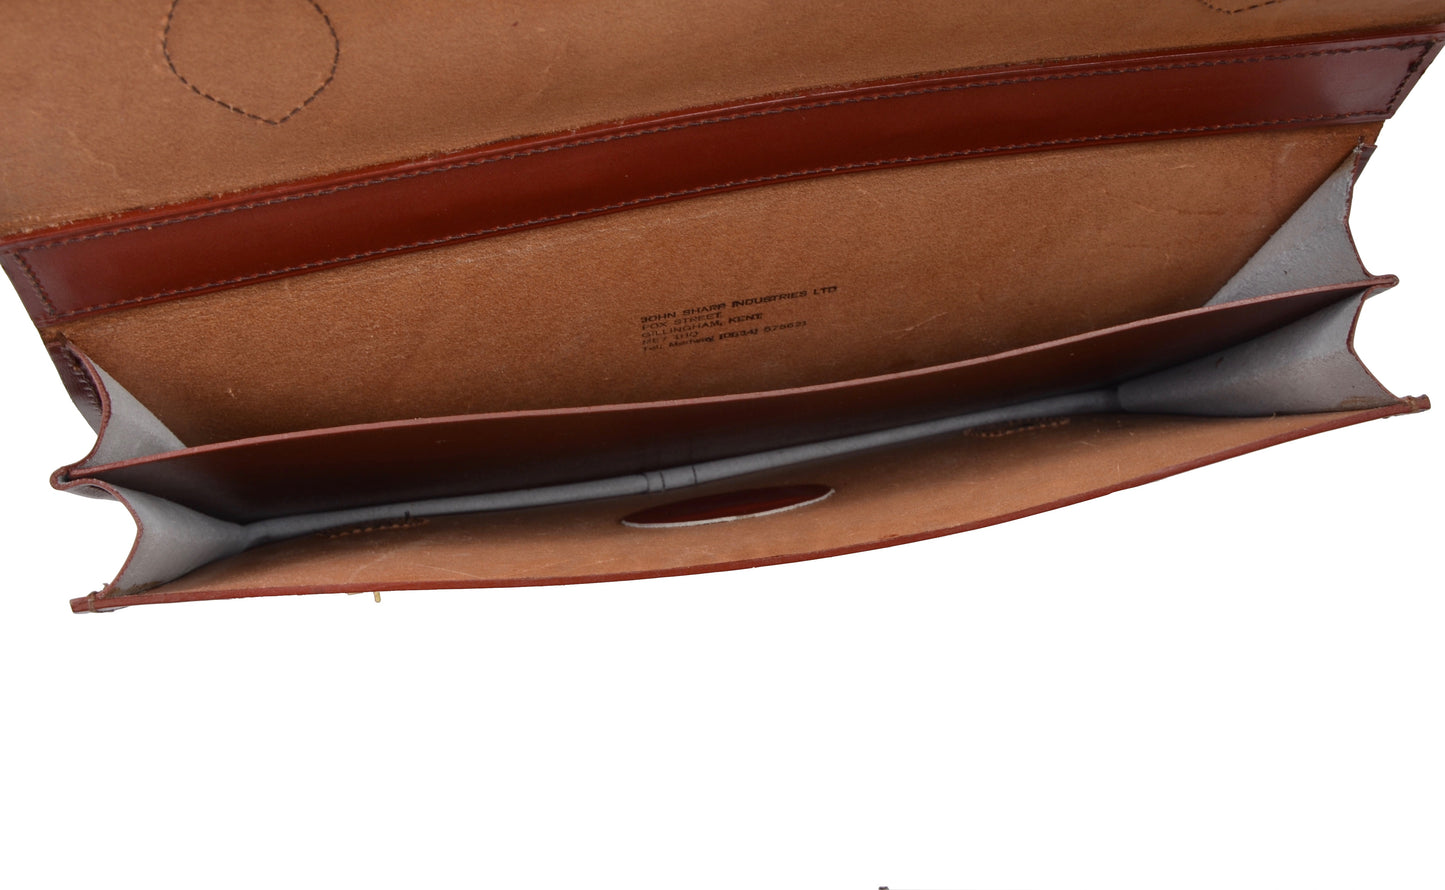 John Sharp Leather Briefcase - Rust